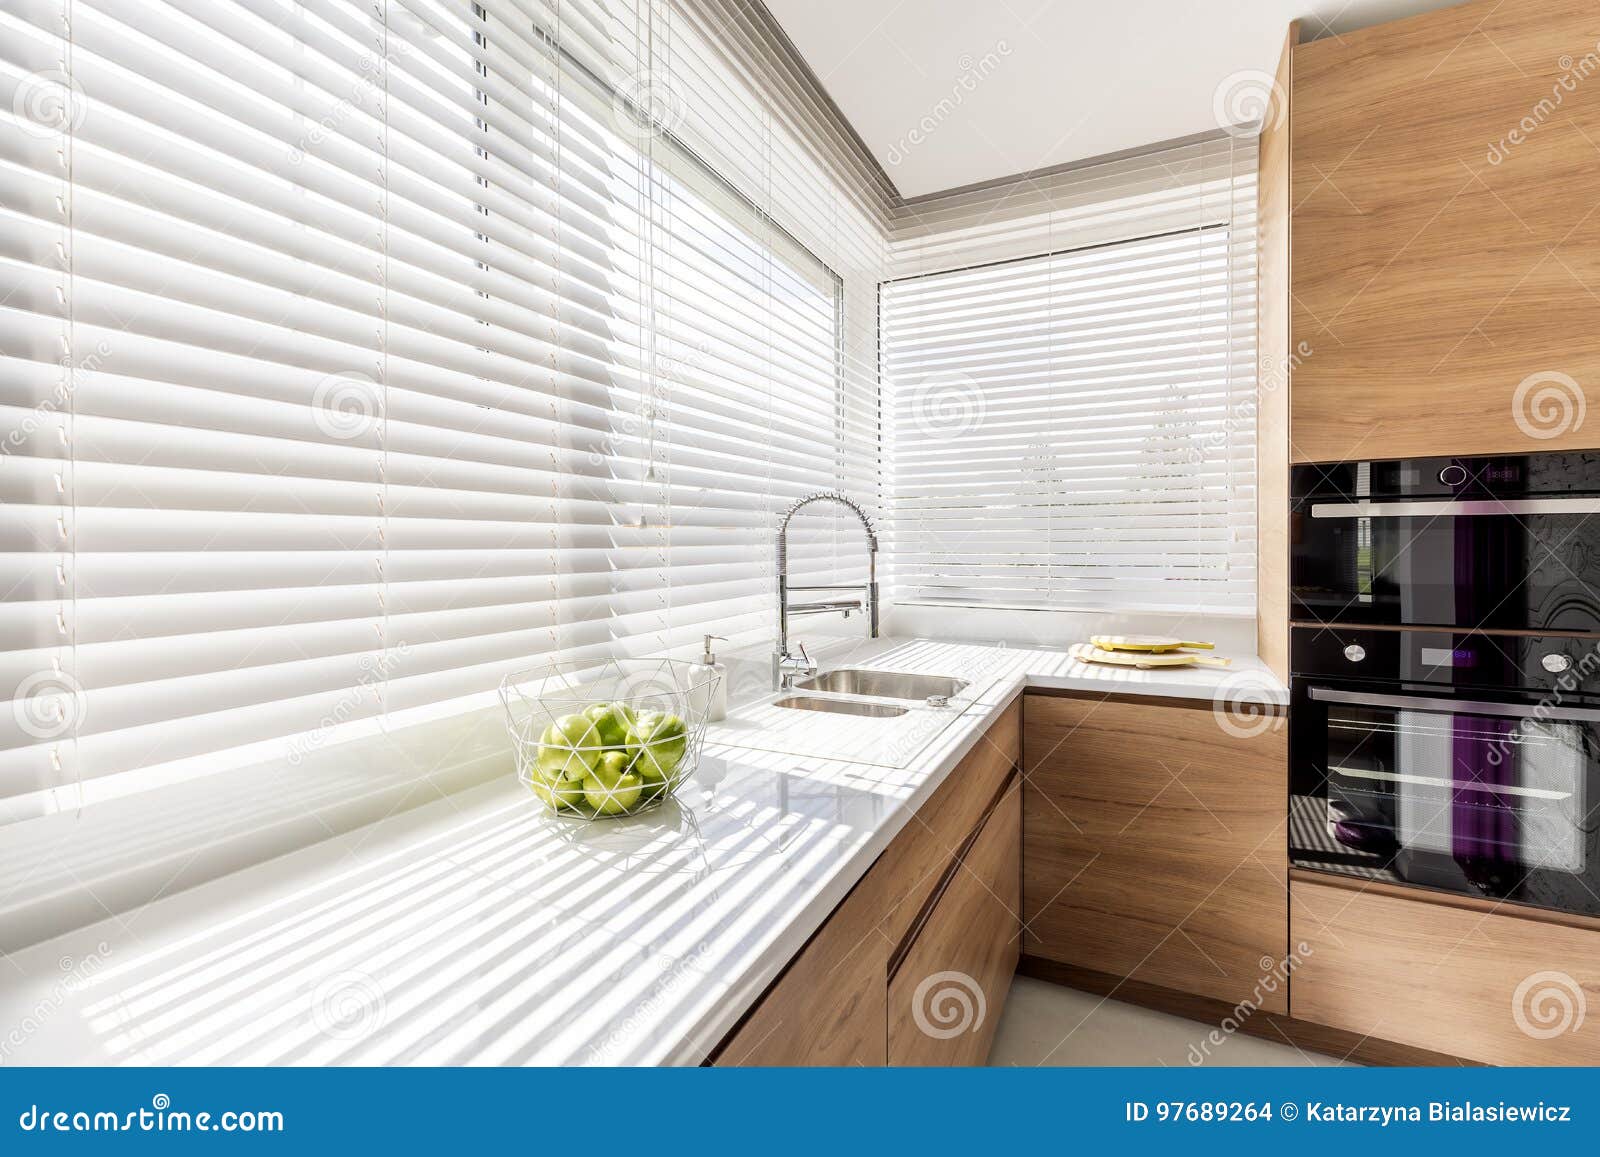 Kitchen With White Window Blinds Stock Photo Image Of Minimalist Household 97689264